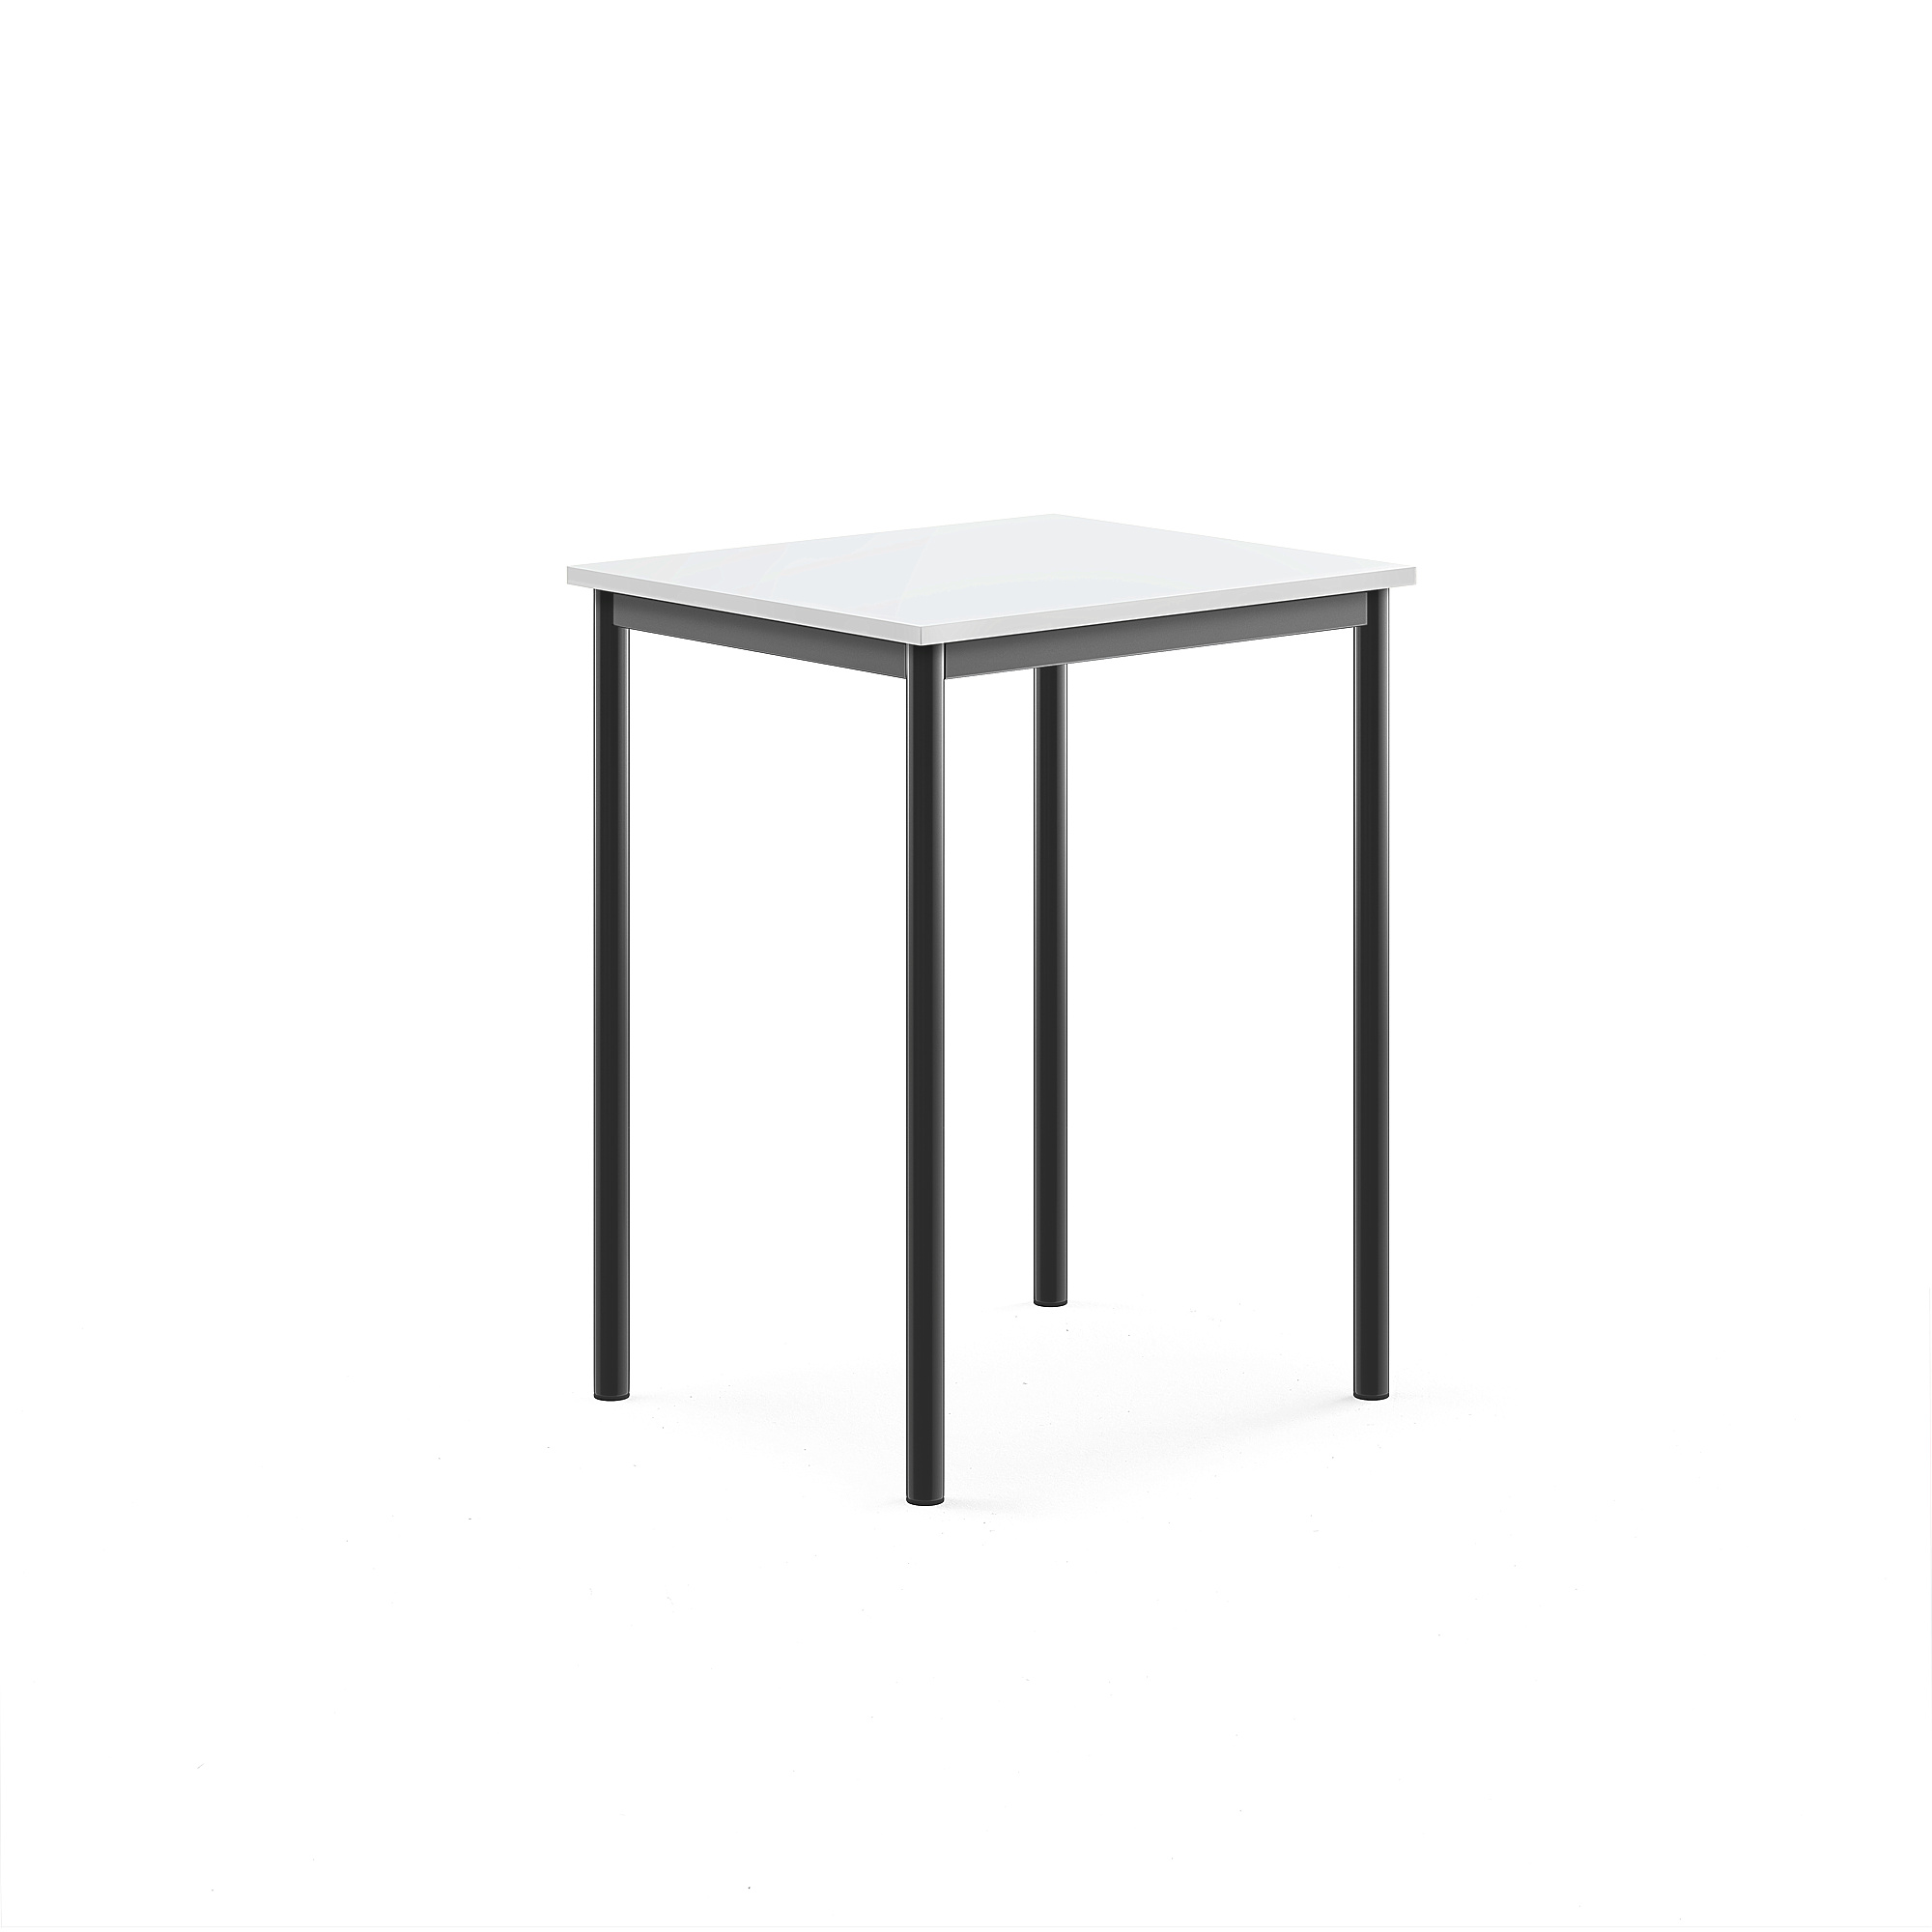 Stůl BORÅS, 700x600x900 mm, antracitově šedé nohy, HPL deska, bílá